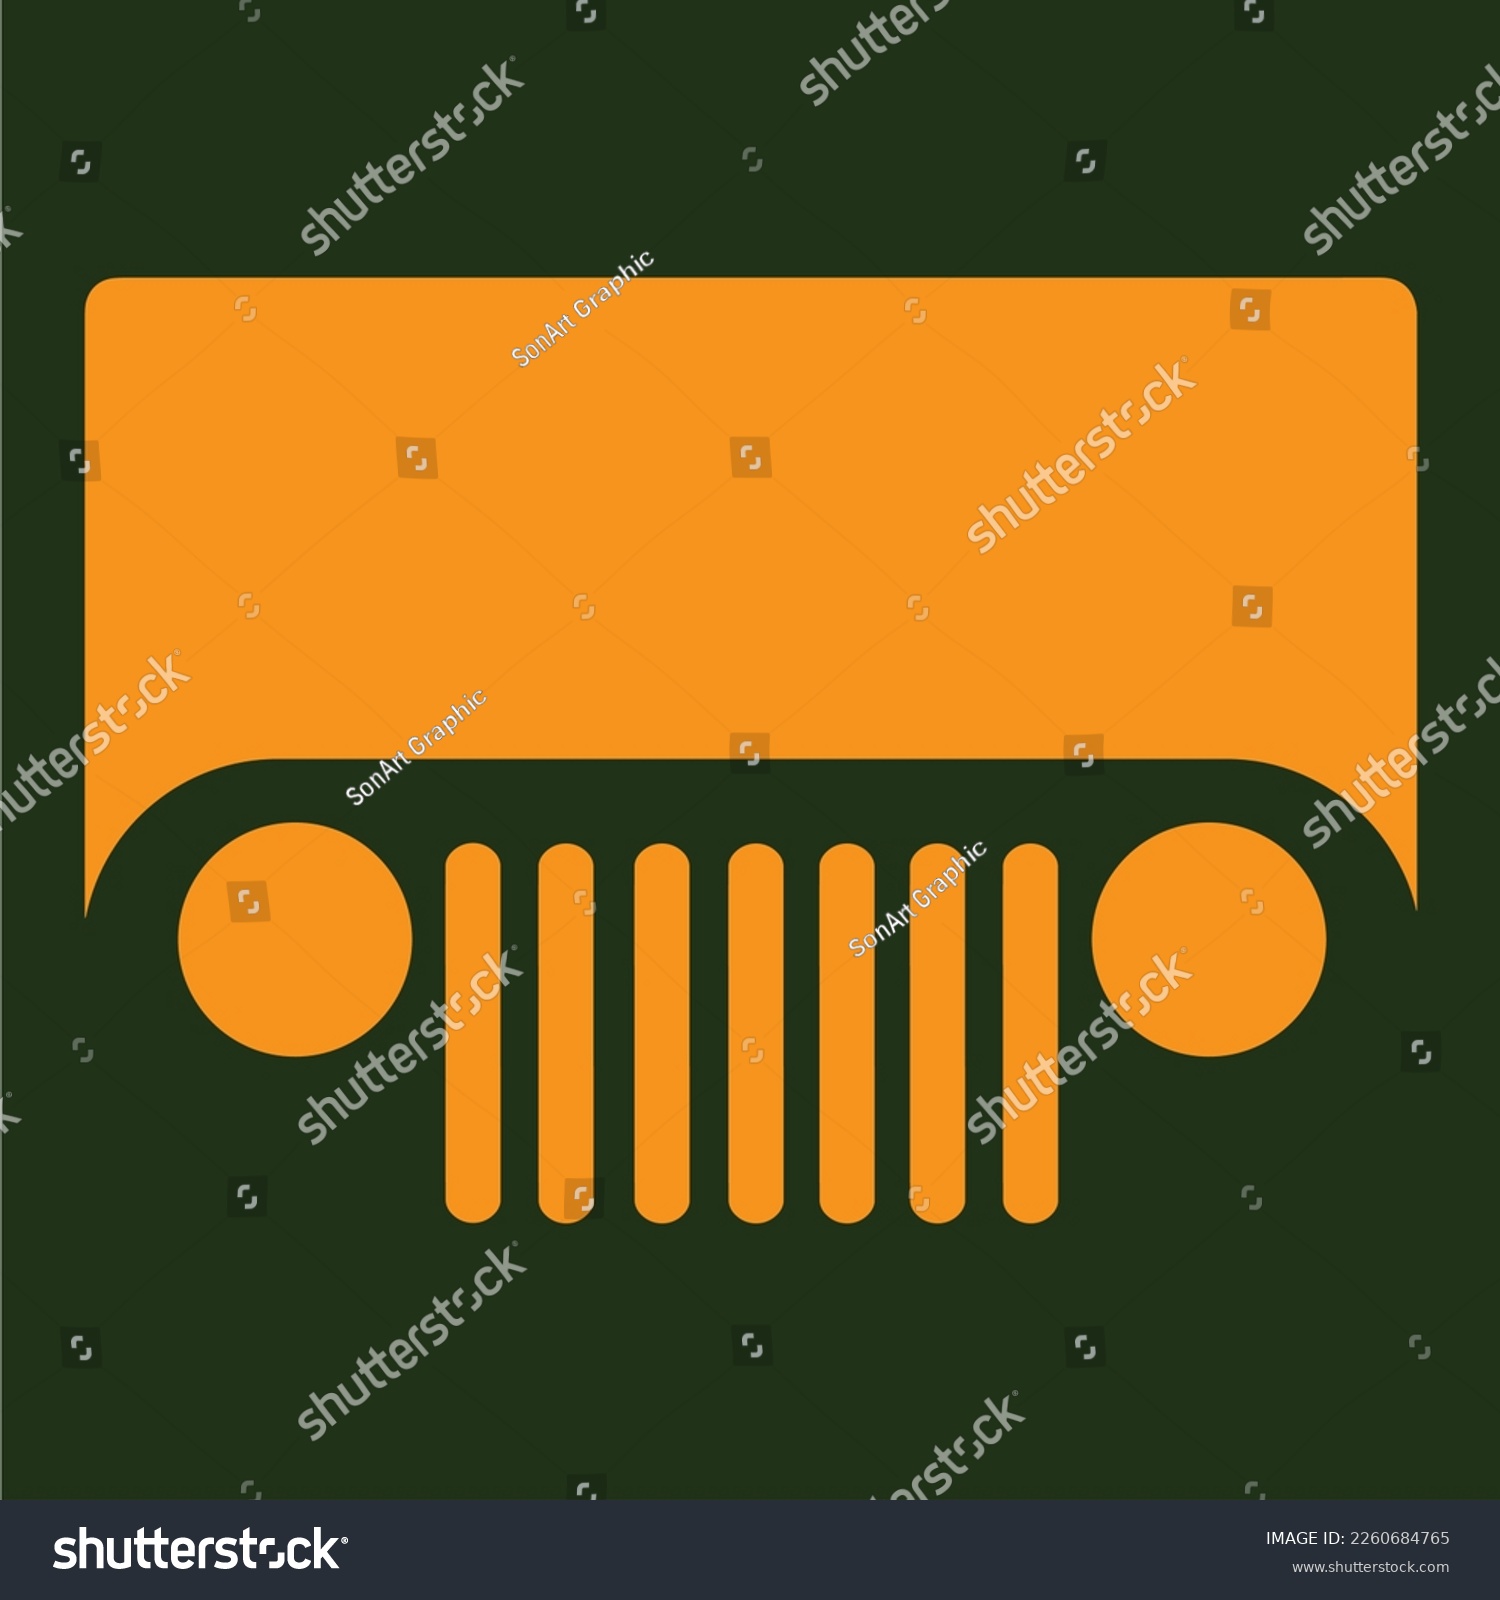 SVG of illustration front jeep view editable eps file svg